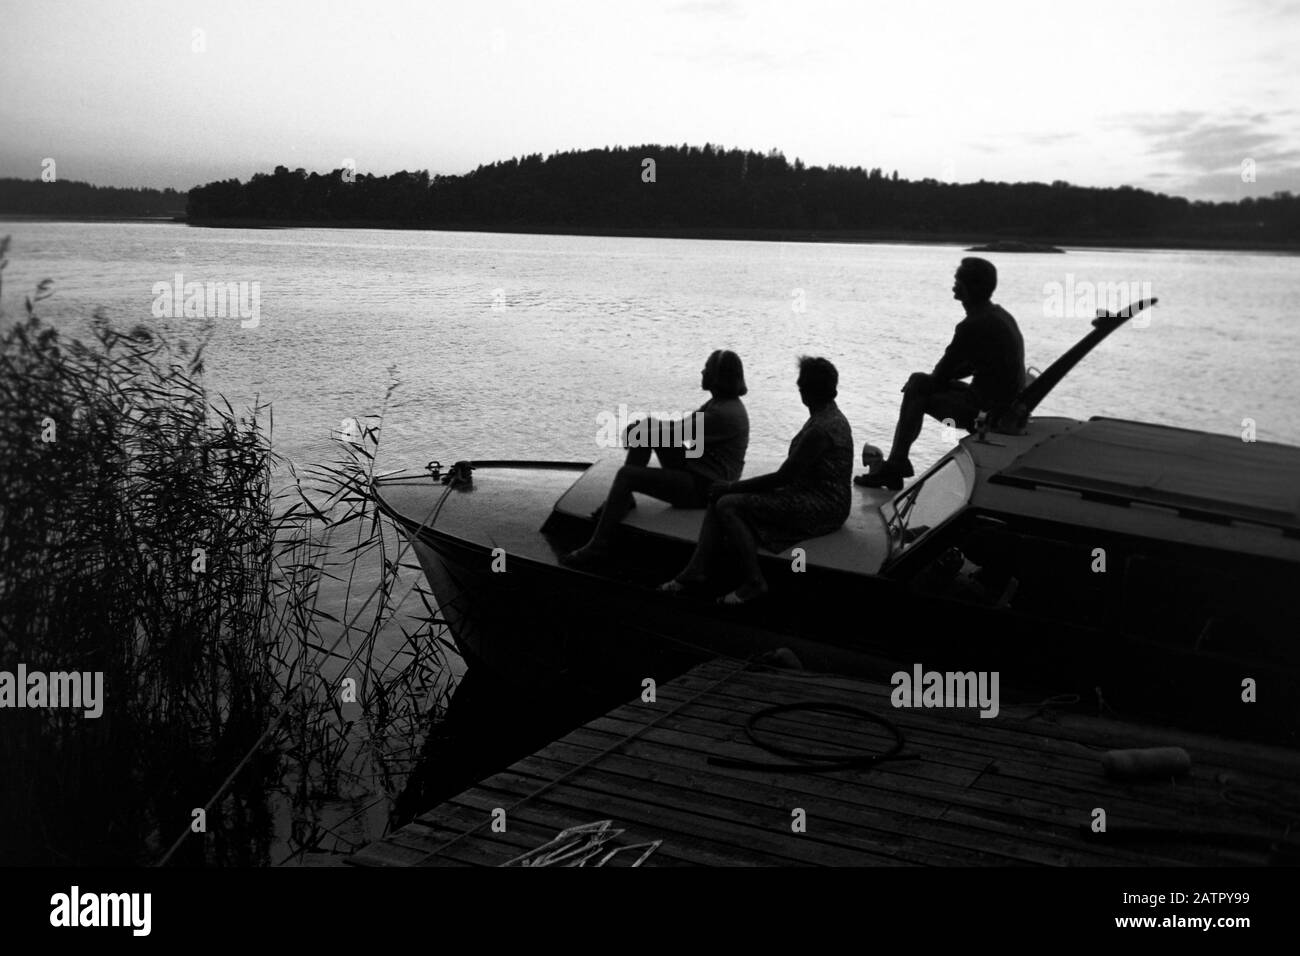 Ansiedler Familie auf Boot am Ufer blickt auf See Mälar, bei Stockholm, Schweden, 1969.  Settlers family on boat on the shore looks out over Lake Malaren, near Stockholm, Sweden, 1969. Stock Photo